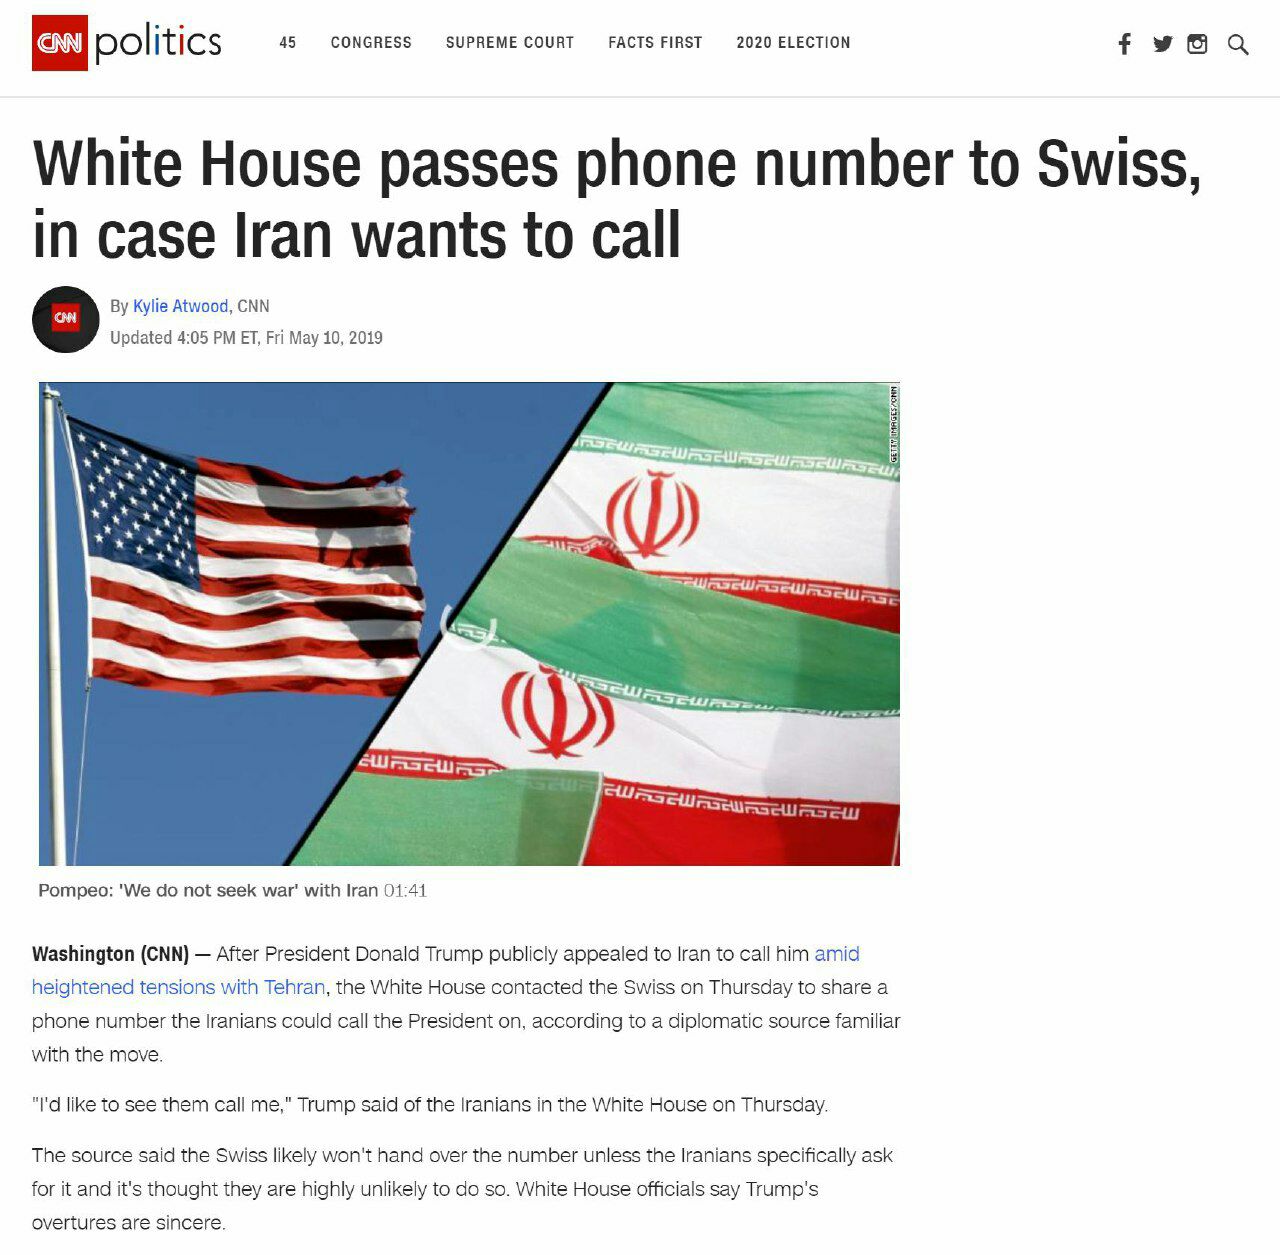 ♦️ سی‌ان‌ان: کاخ سفید برای ایران شماره تلفن فرستاده است